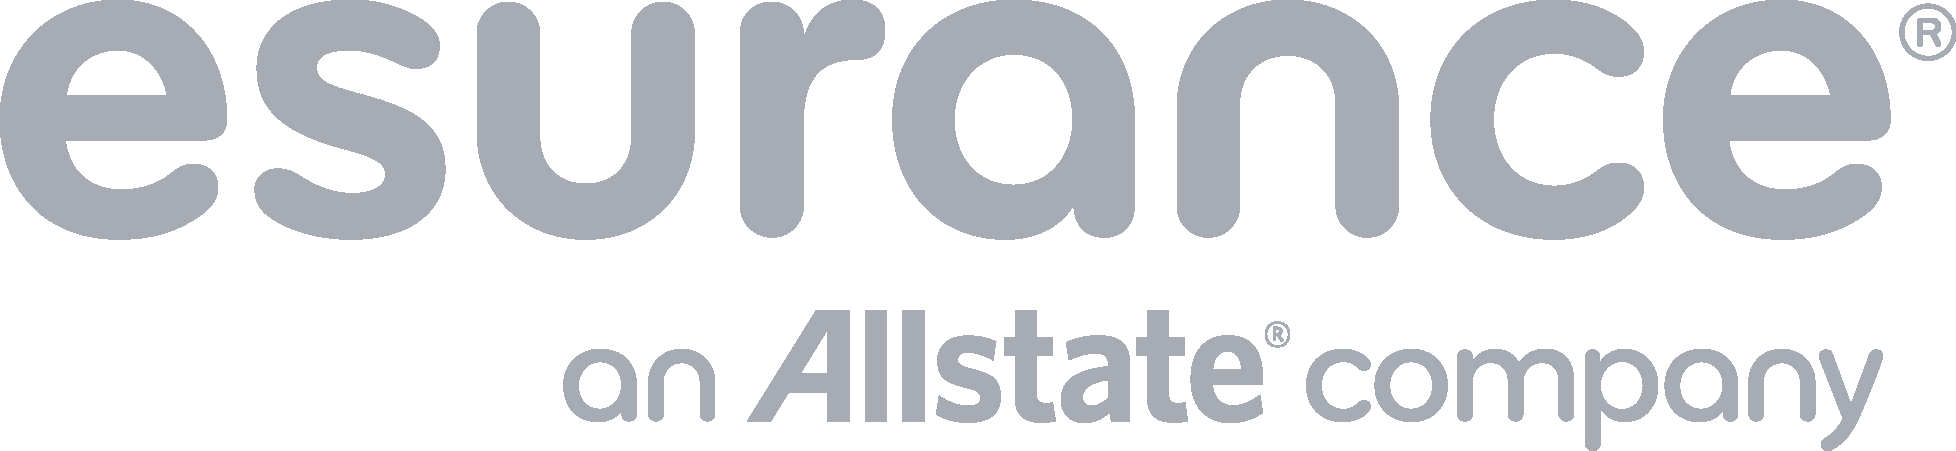 Esurance Logo - Cool Gray